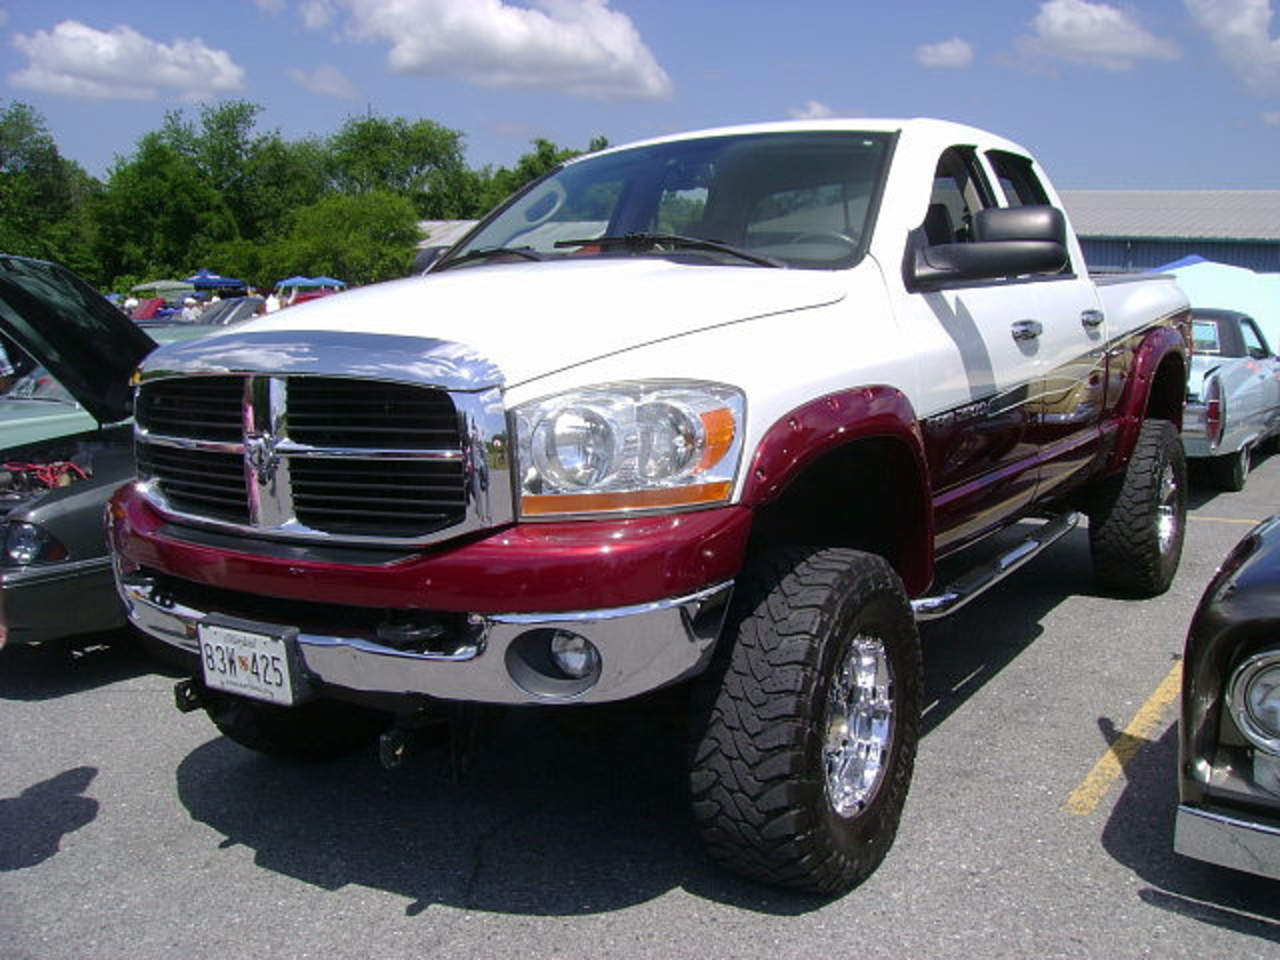 2006 Dodge Ram 2500 4x4 | Flickr - Photo Sharing!